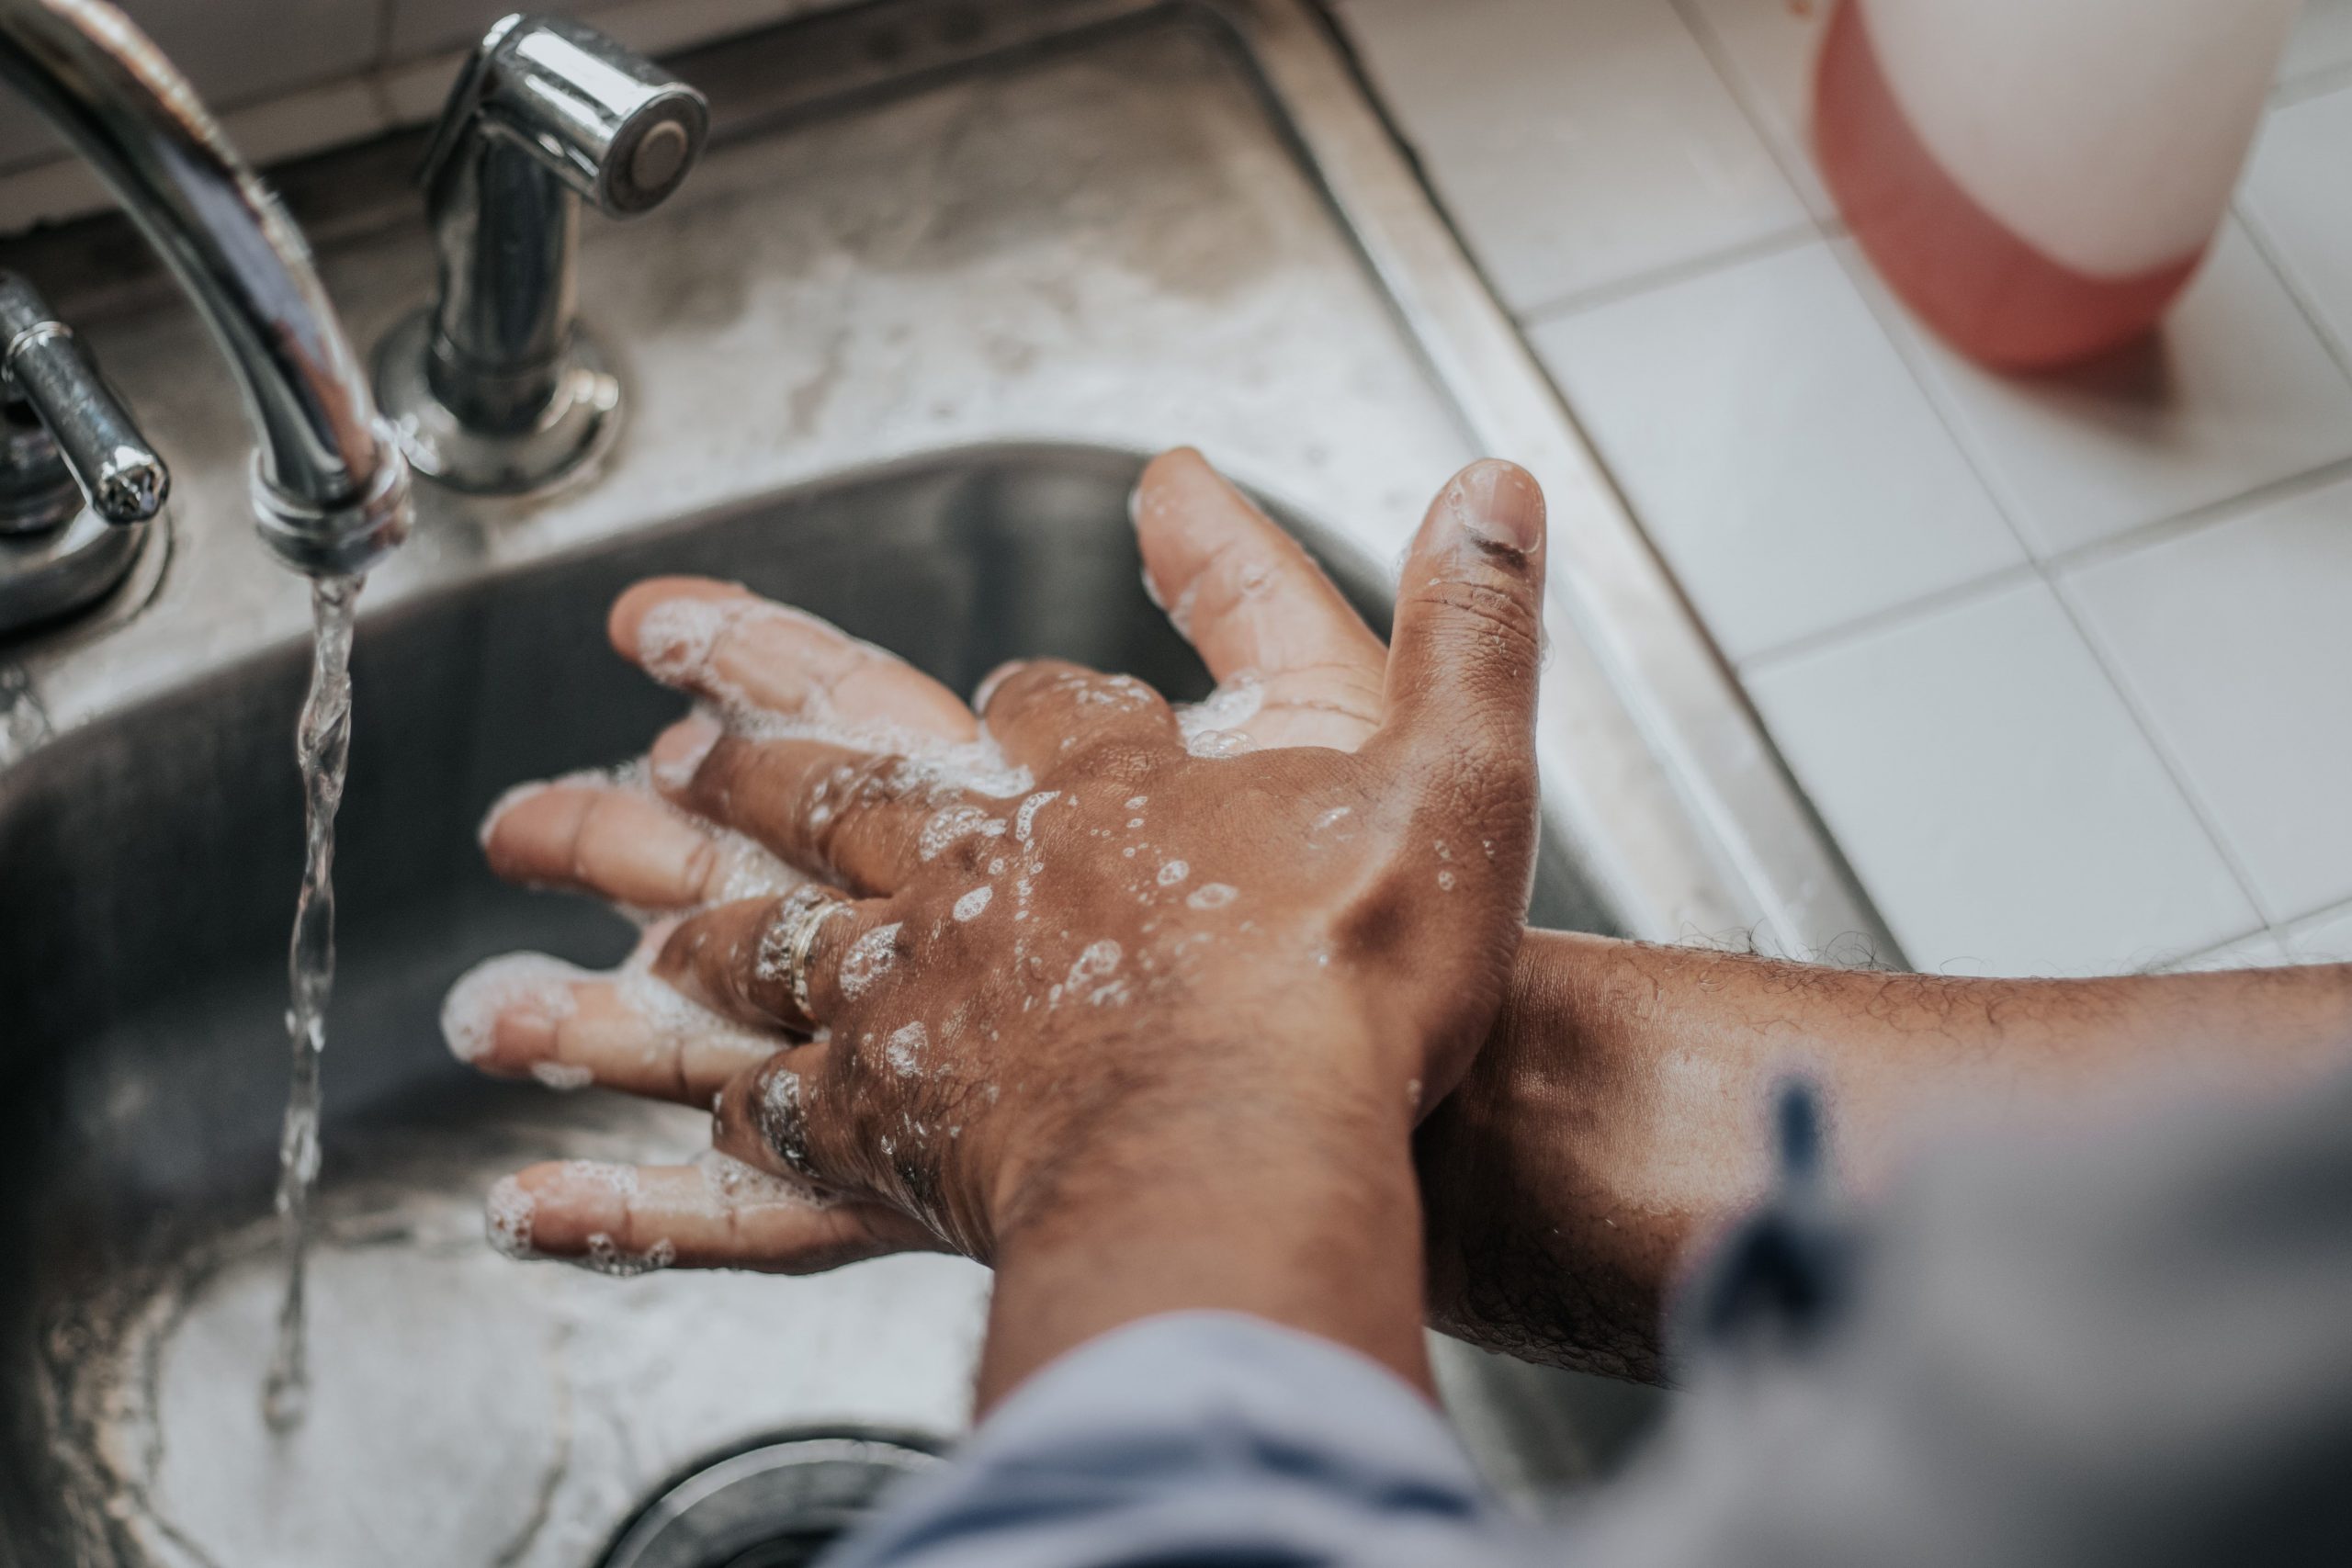 Global Handwashing Day: Things to keep in mind while washing hands